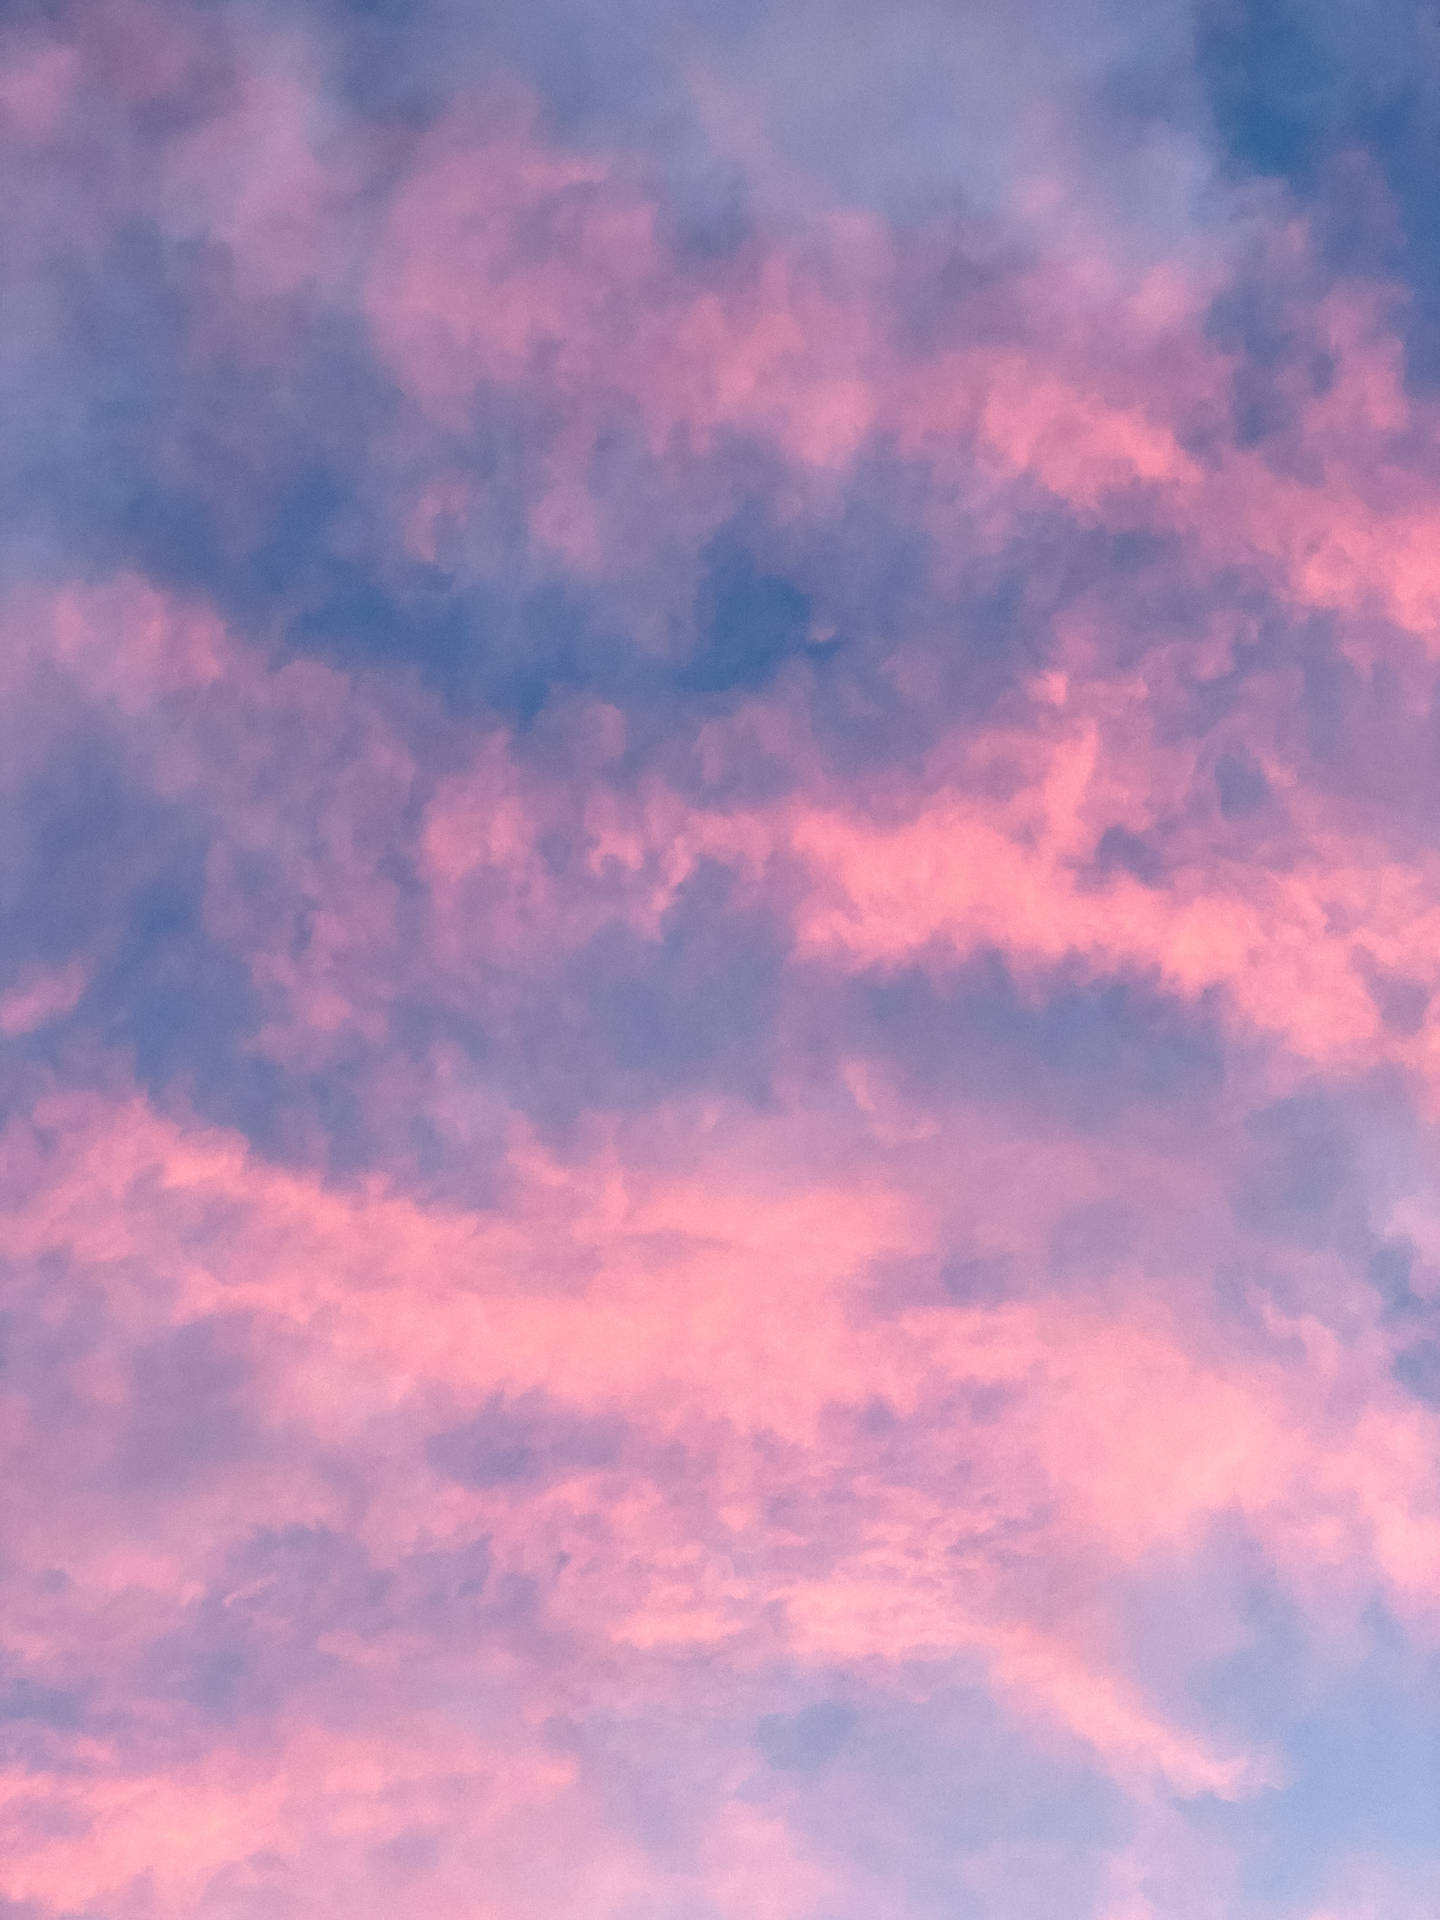 Aesthetic Sky Of Pink Wispy Clouds